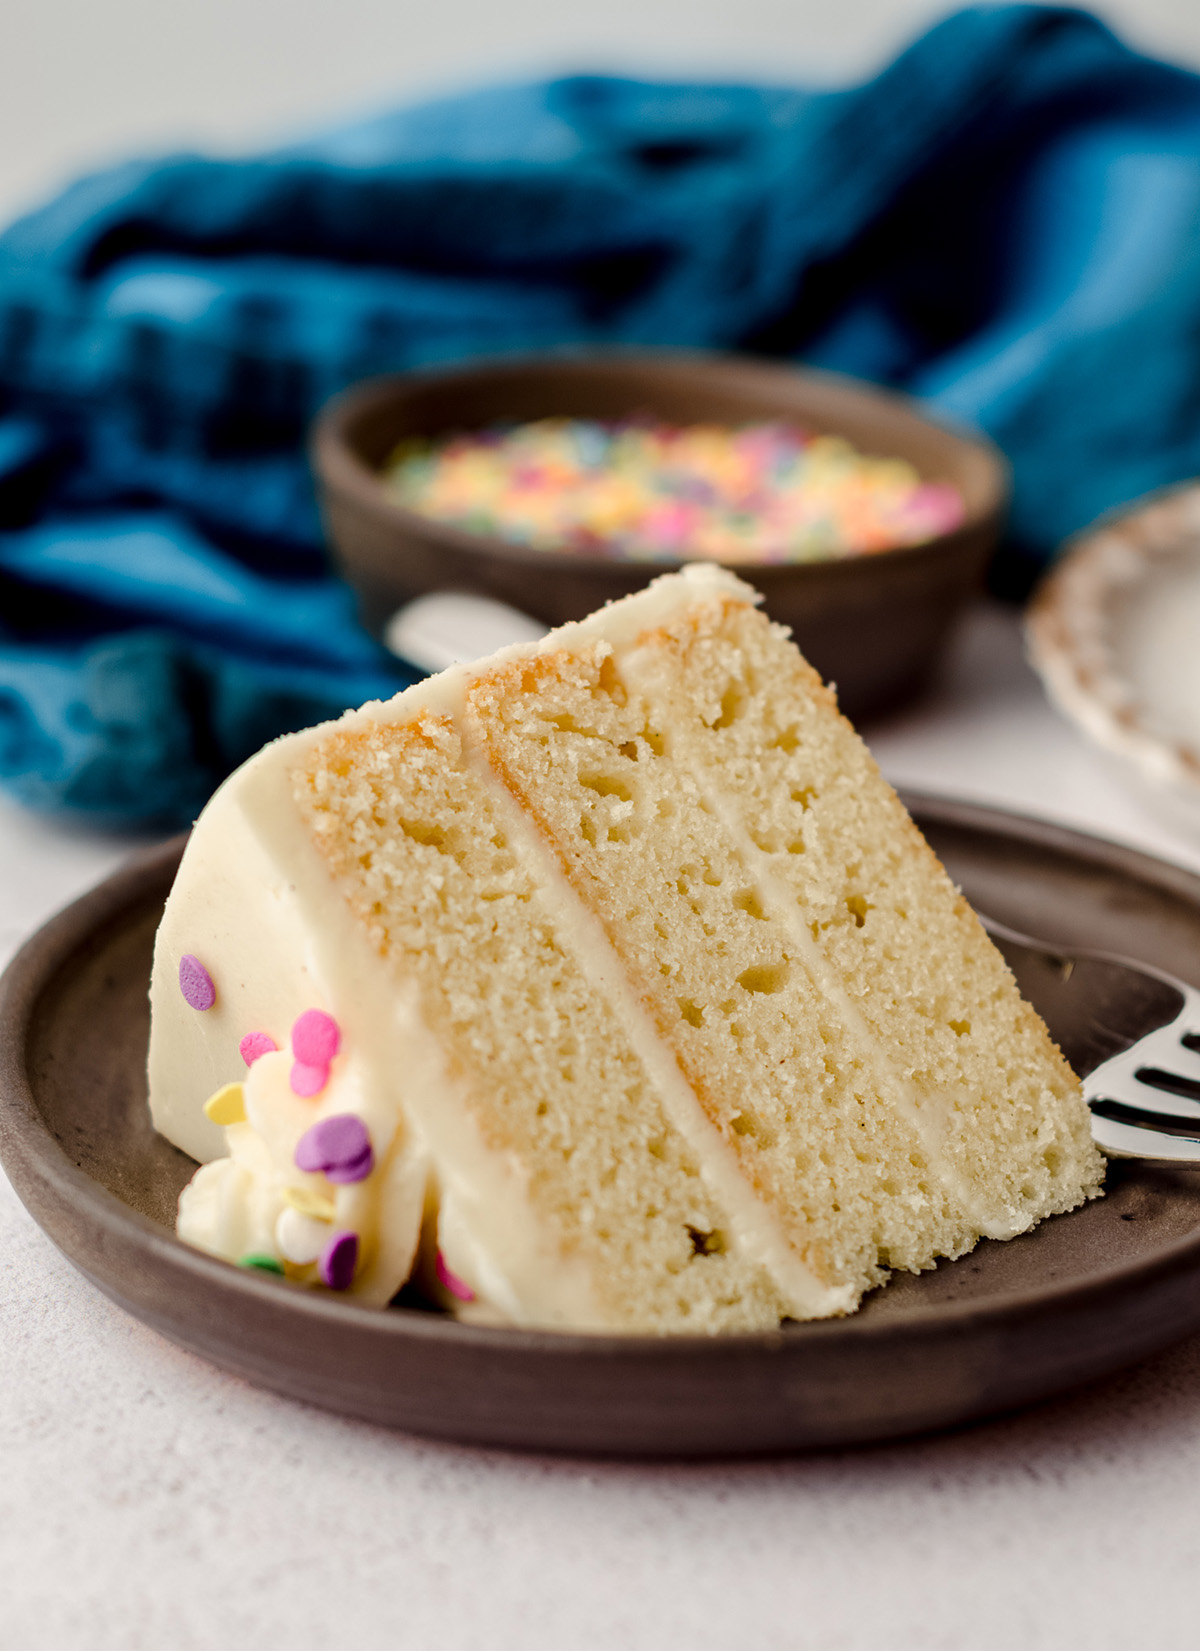 I. Introduction to Baking Vanilla Cakes